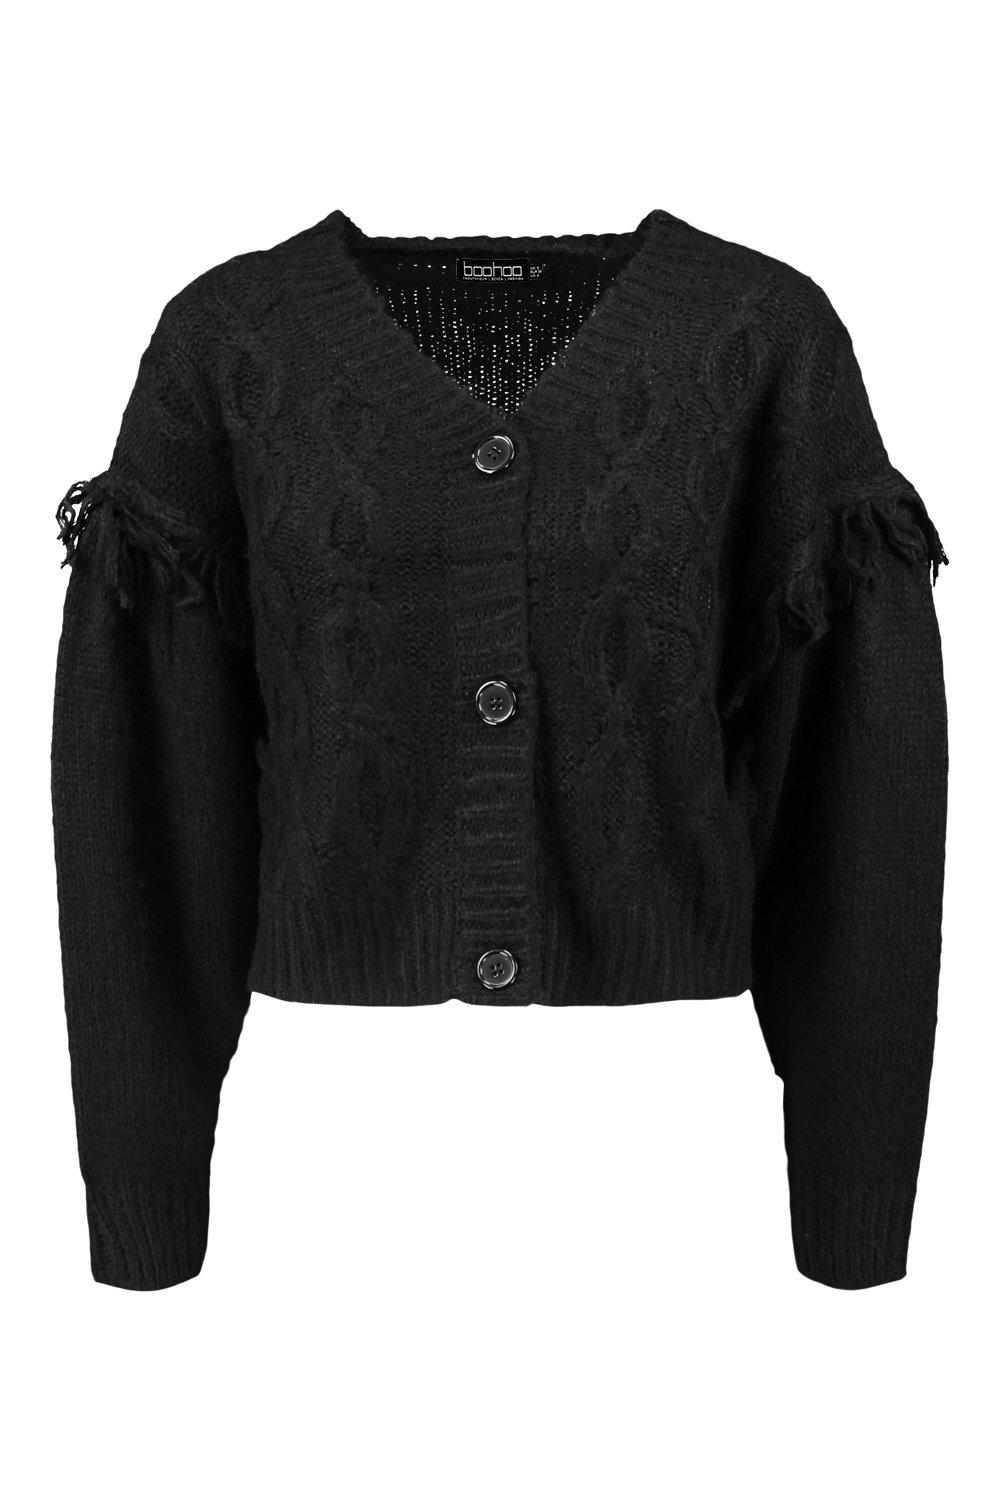 boohoo Chunky Knit Cropped Cardigan - Black - Size M